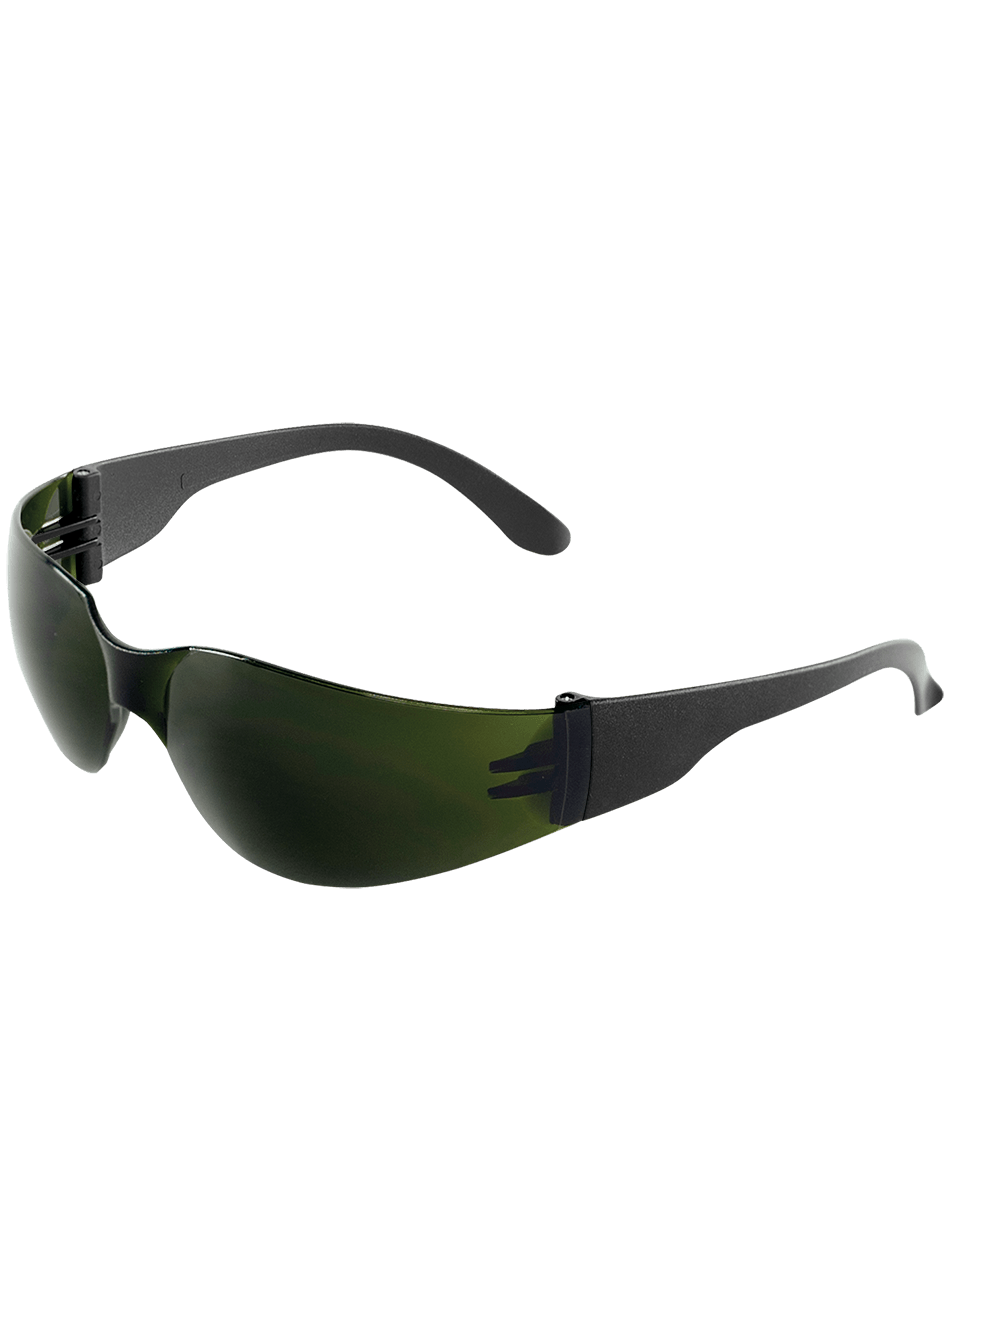 Torrent™ Welding Green IR Shade 5.0 Lens, Matte Black Frame Safety Glasses - BH1417